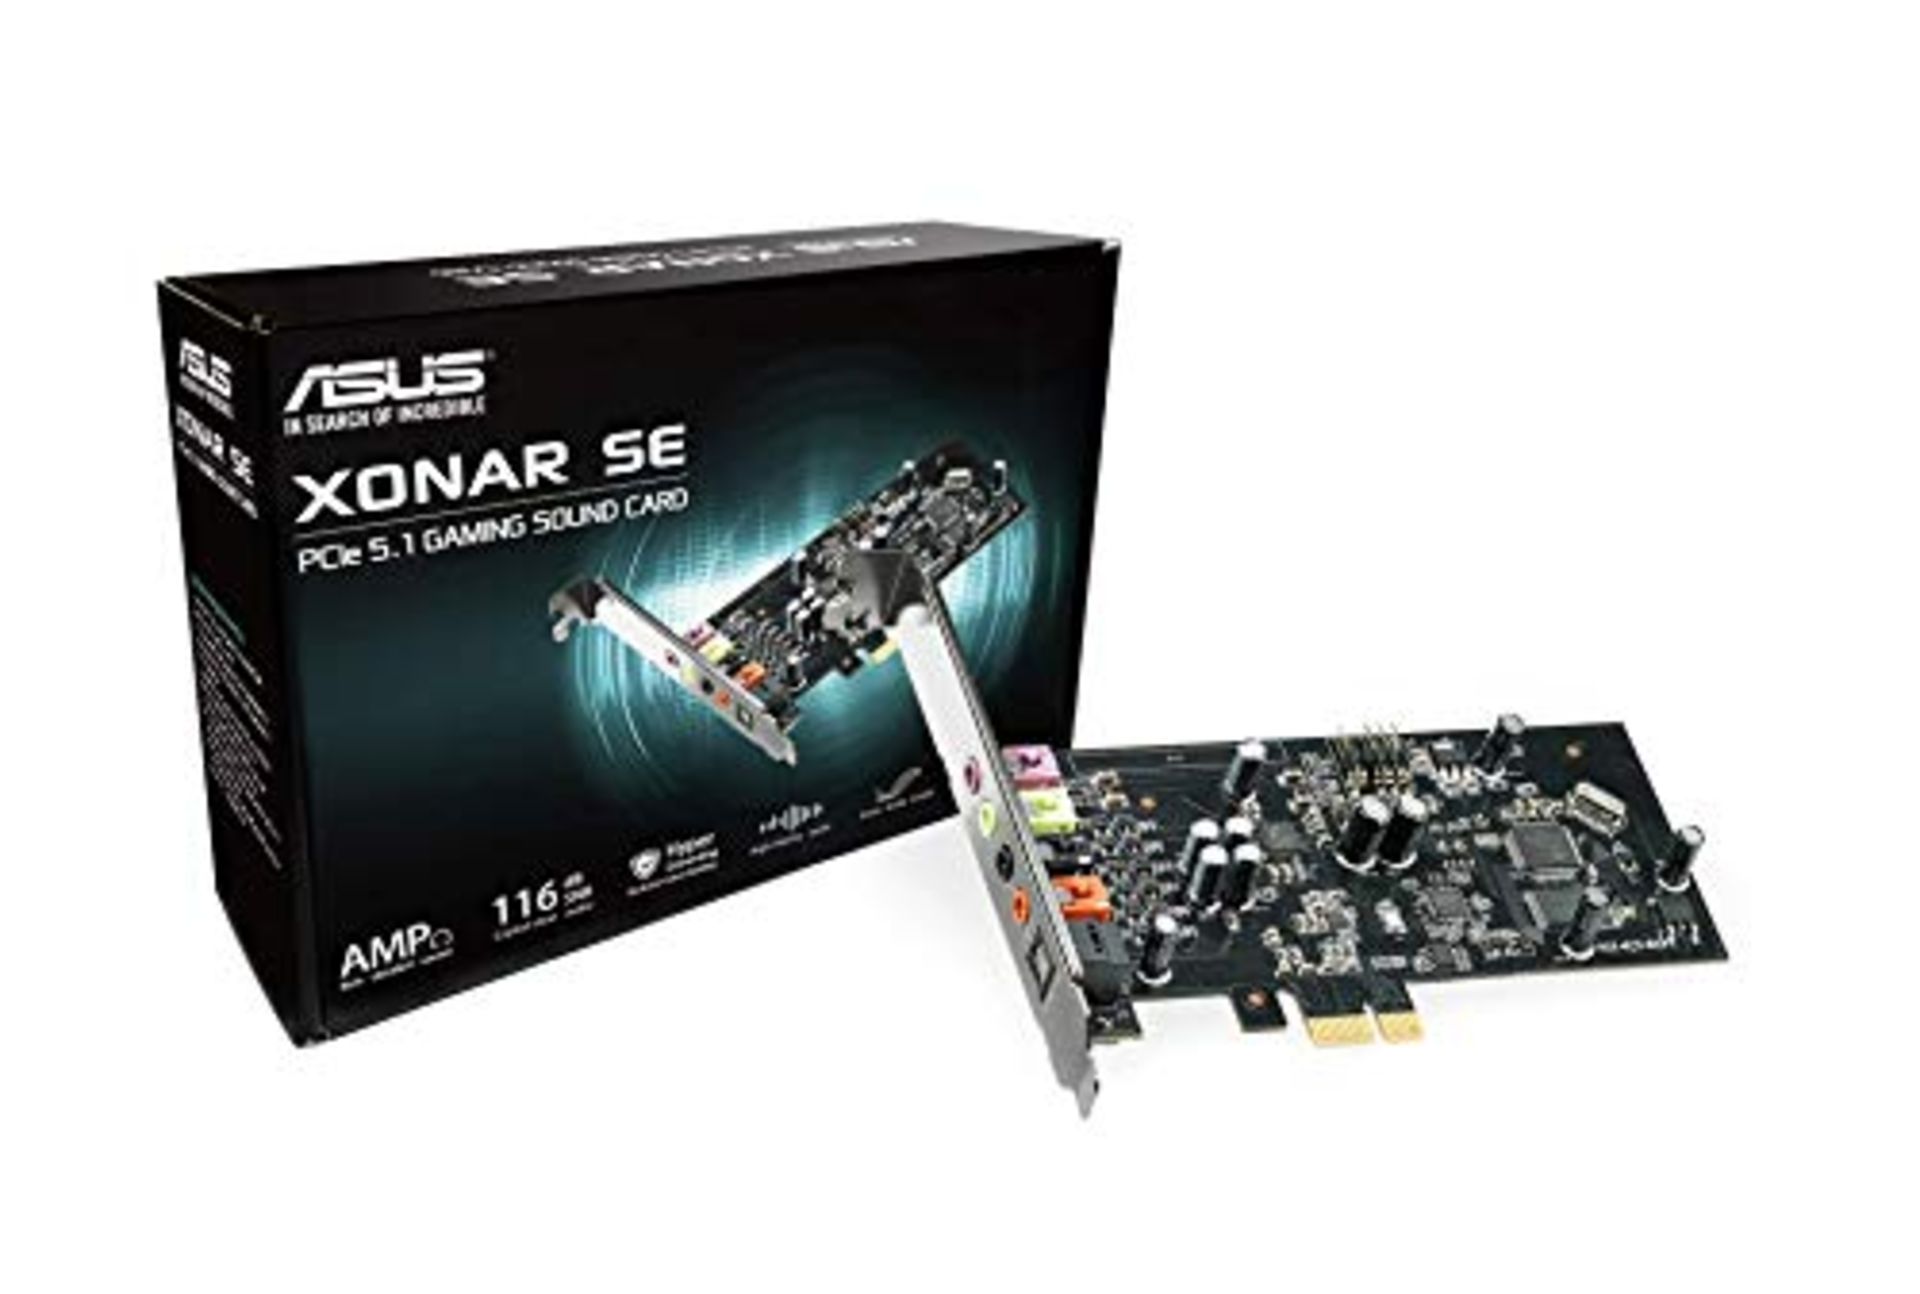 Asus XONAR SE 5.1 Gaming Soundcard, PCIe, Hi-Res Audio, 300ohm, 116dB SNR, Headphone A